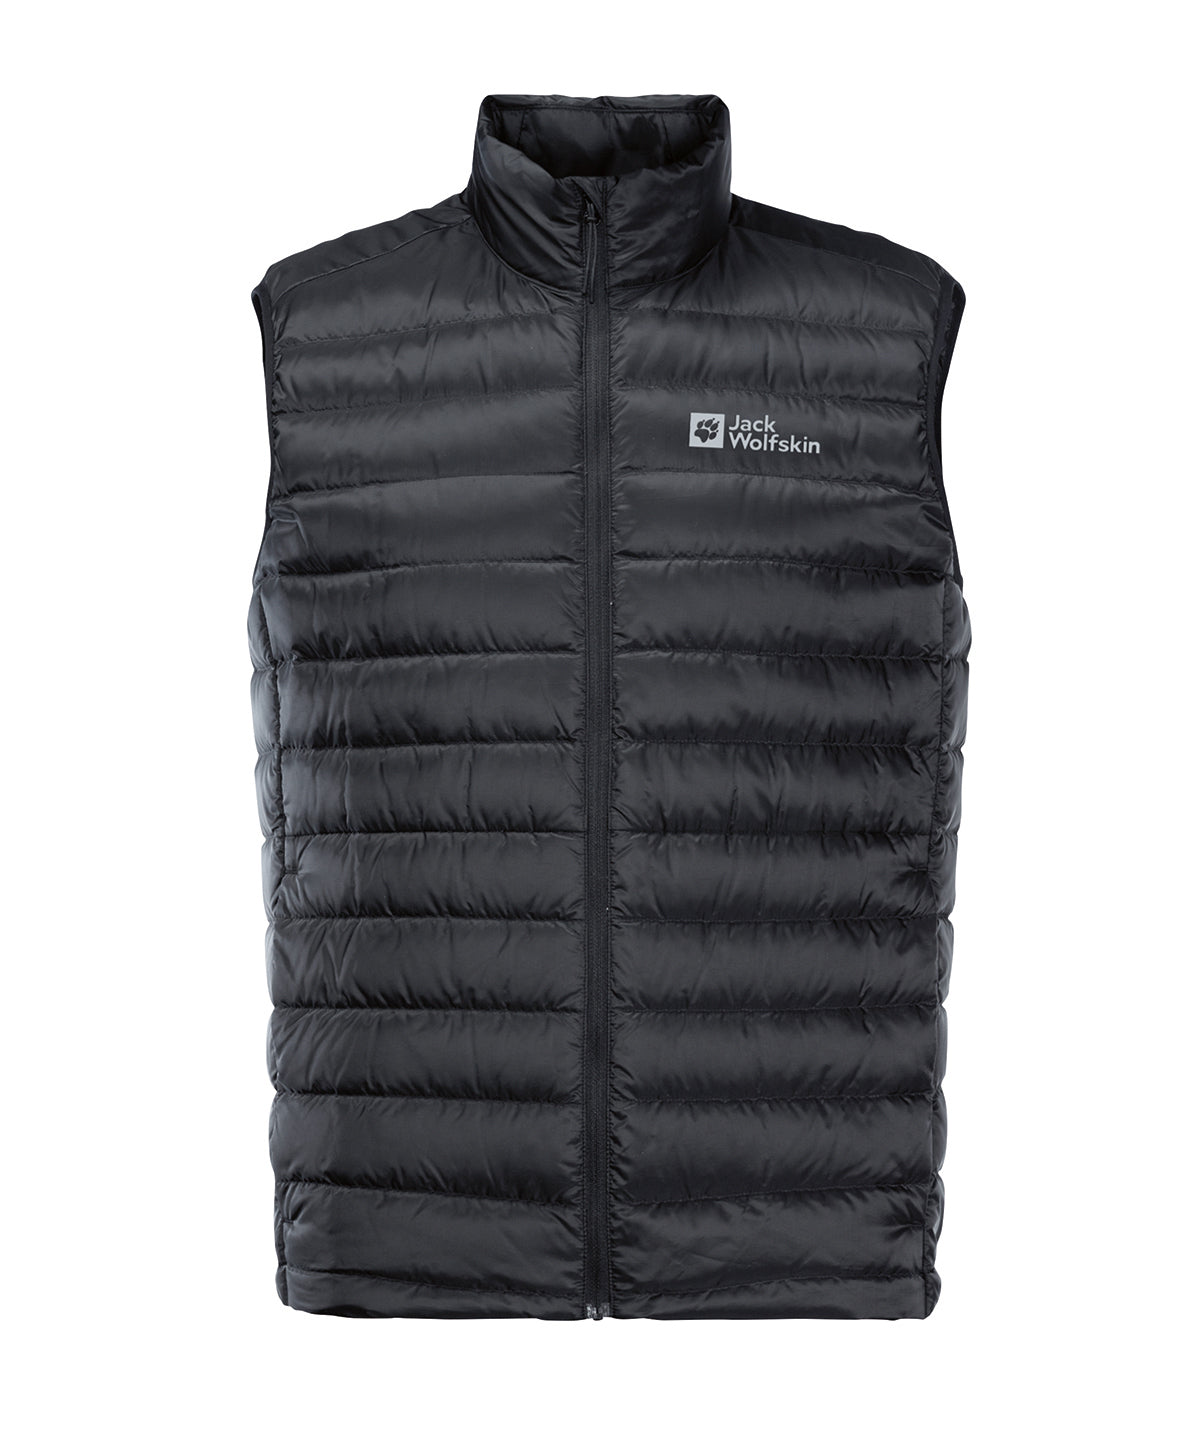 Personalised Body Warmers - Black Jack Wolfskin Packable padded vest (NL)